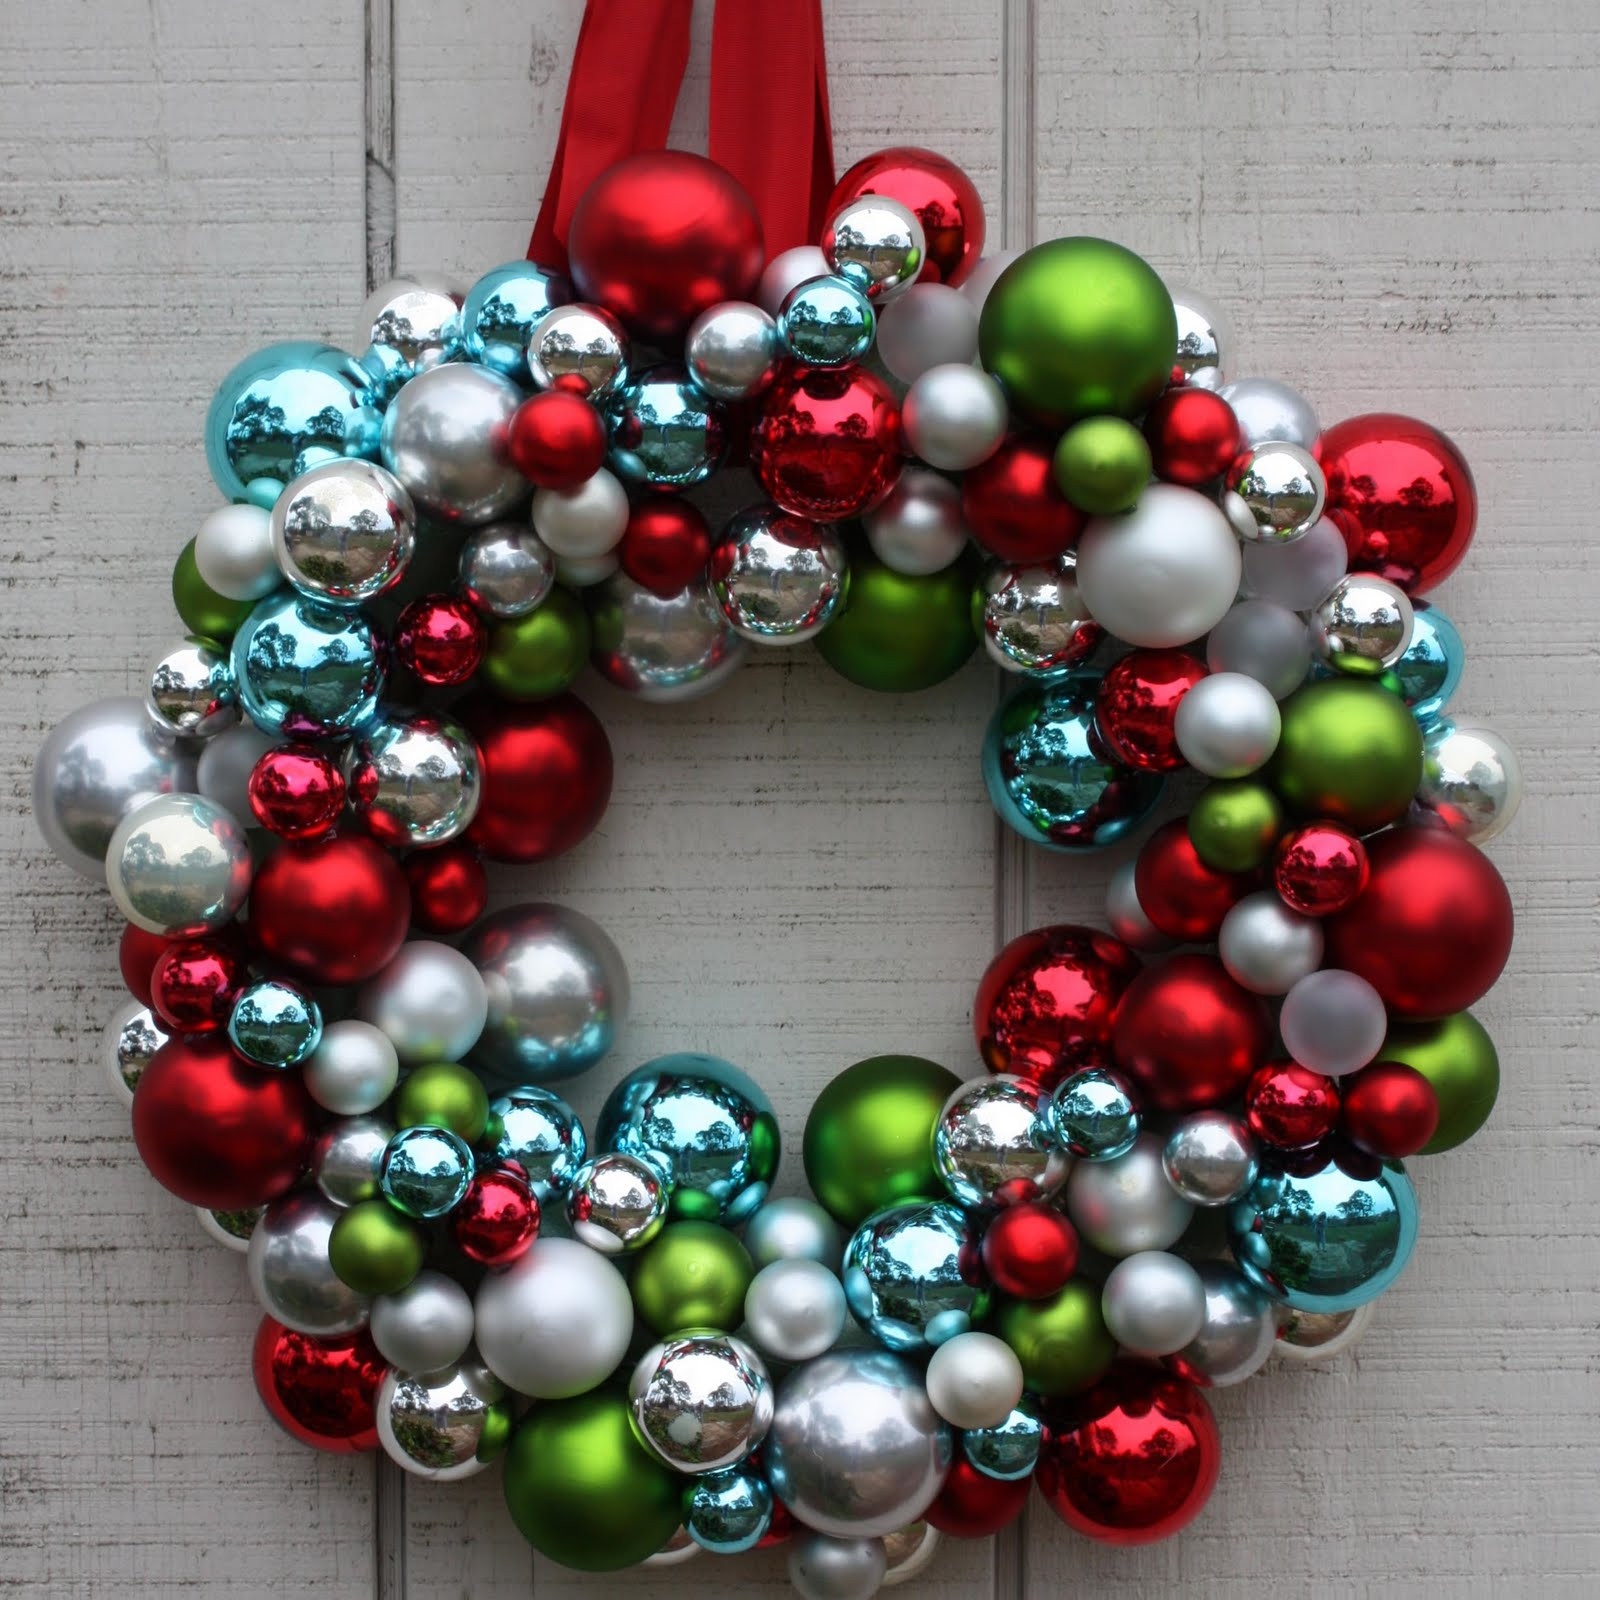 Best ideas about DIY Christmas Ornament Wreath
. Save or Pin Christmas Ornament Wreath Now.